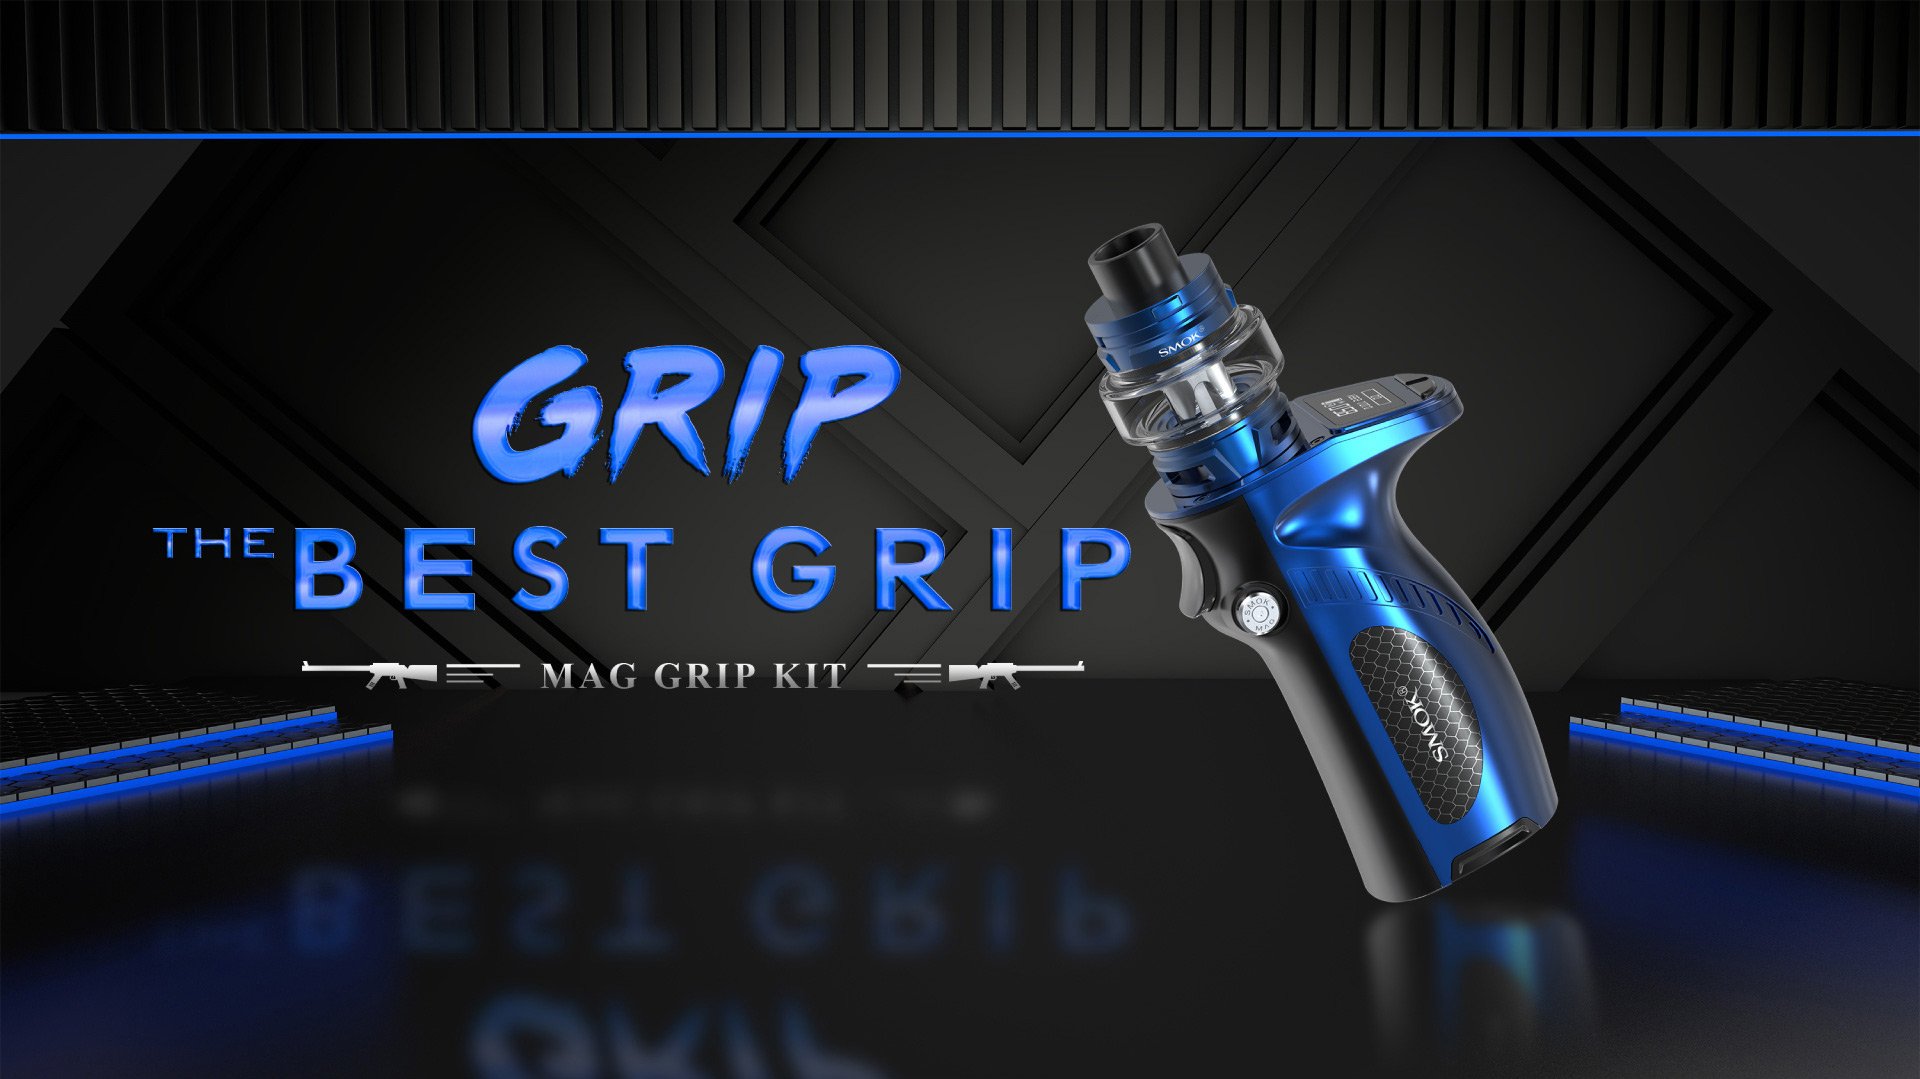 SMOK Mag Grip Kit Promo UK